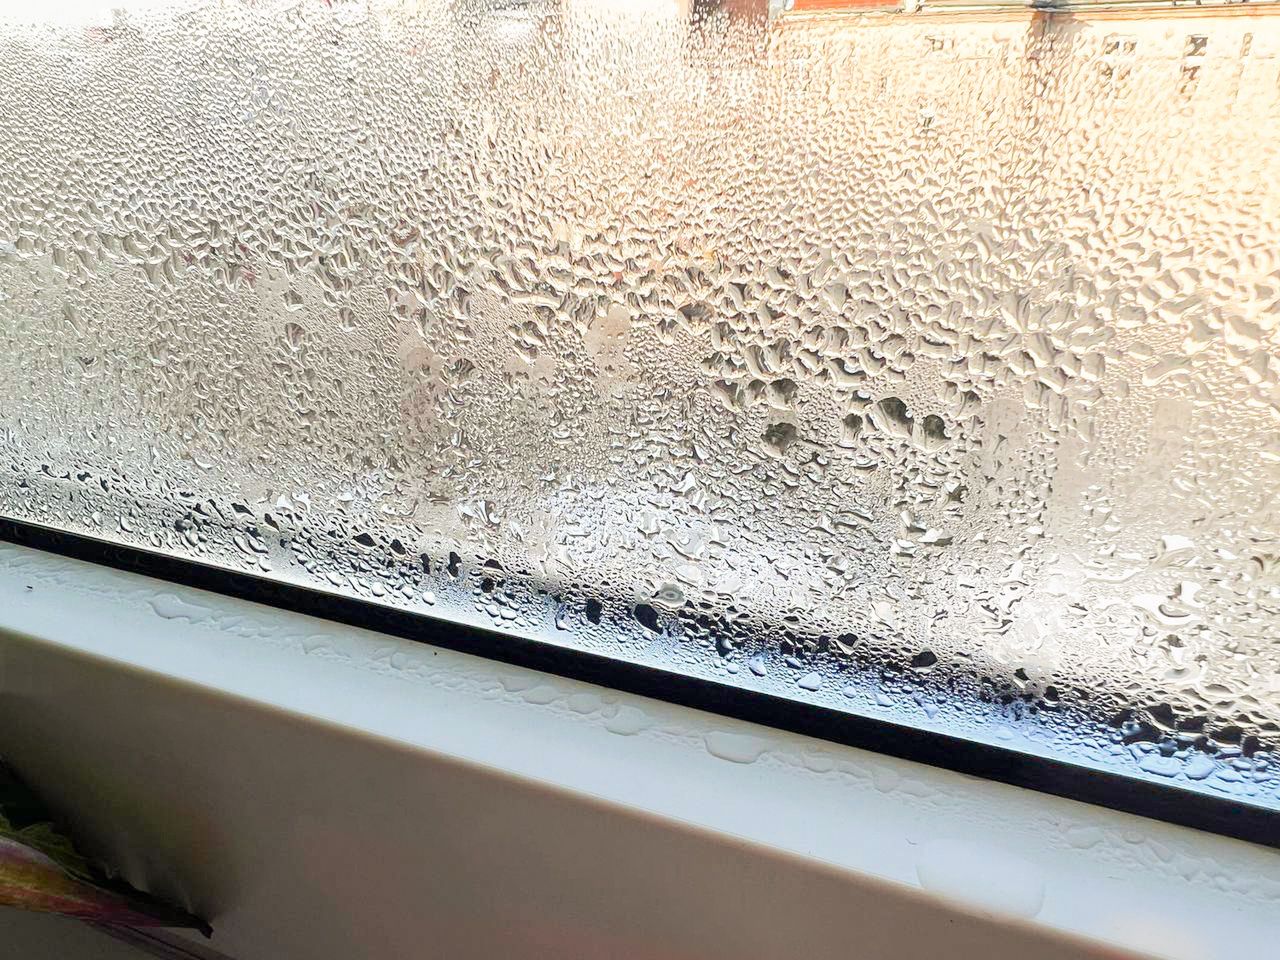 Shaving foam can help remove moisture accumulated on windows.